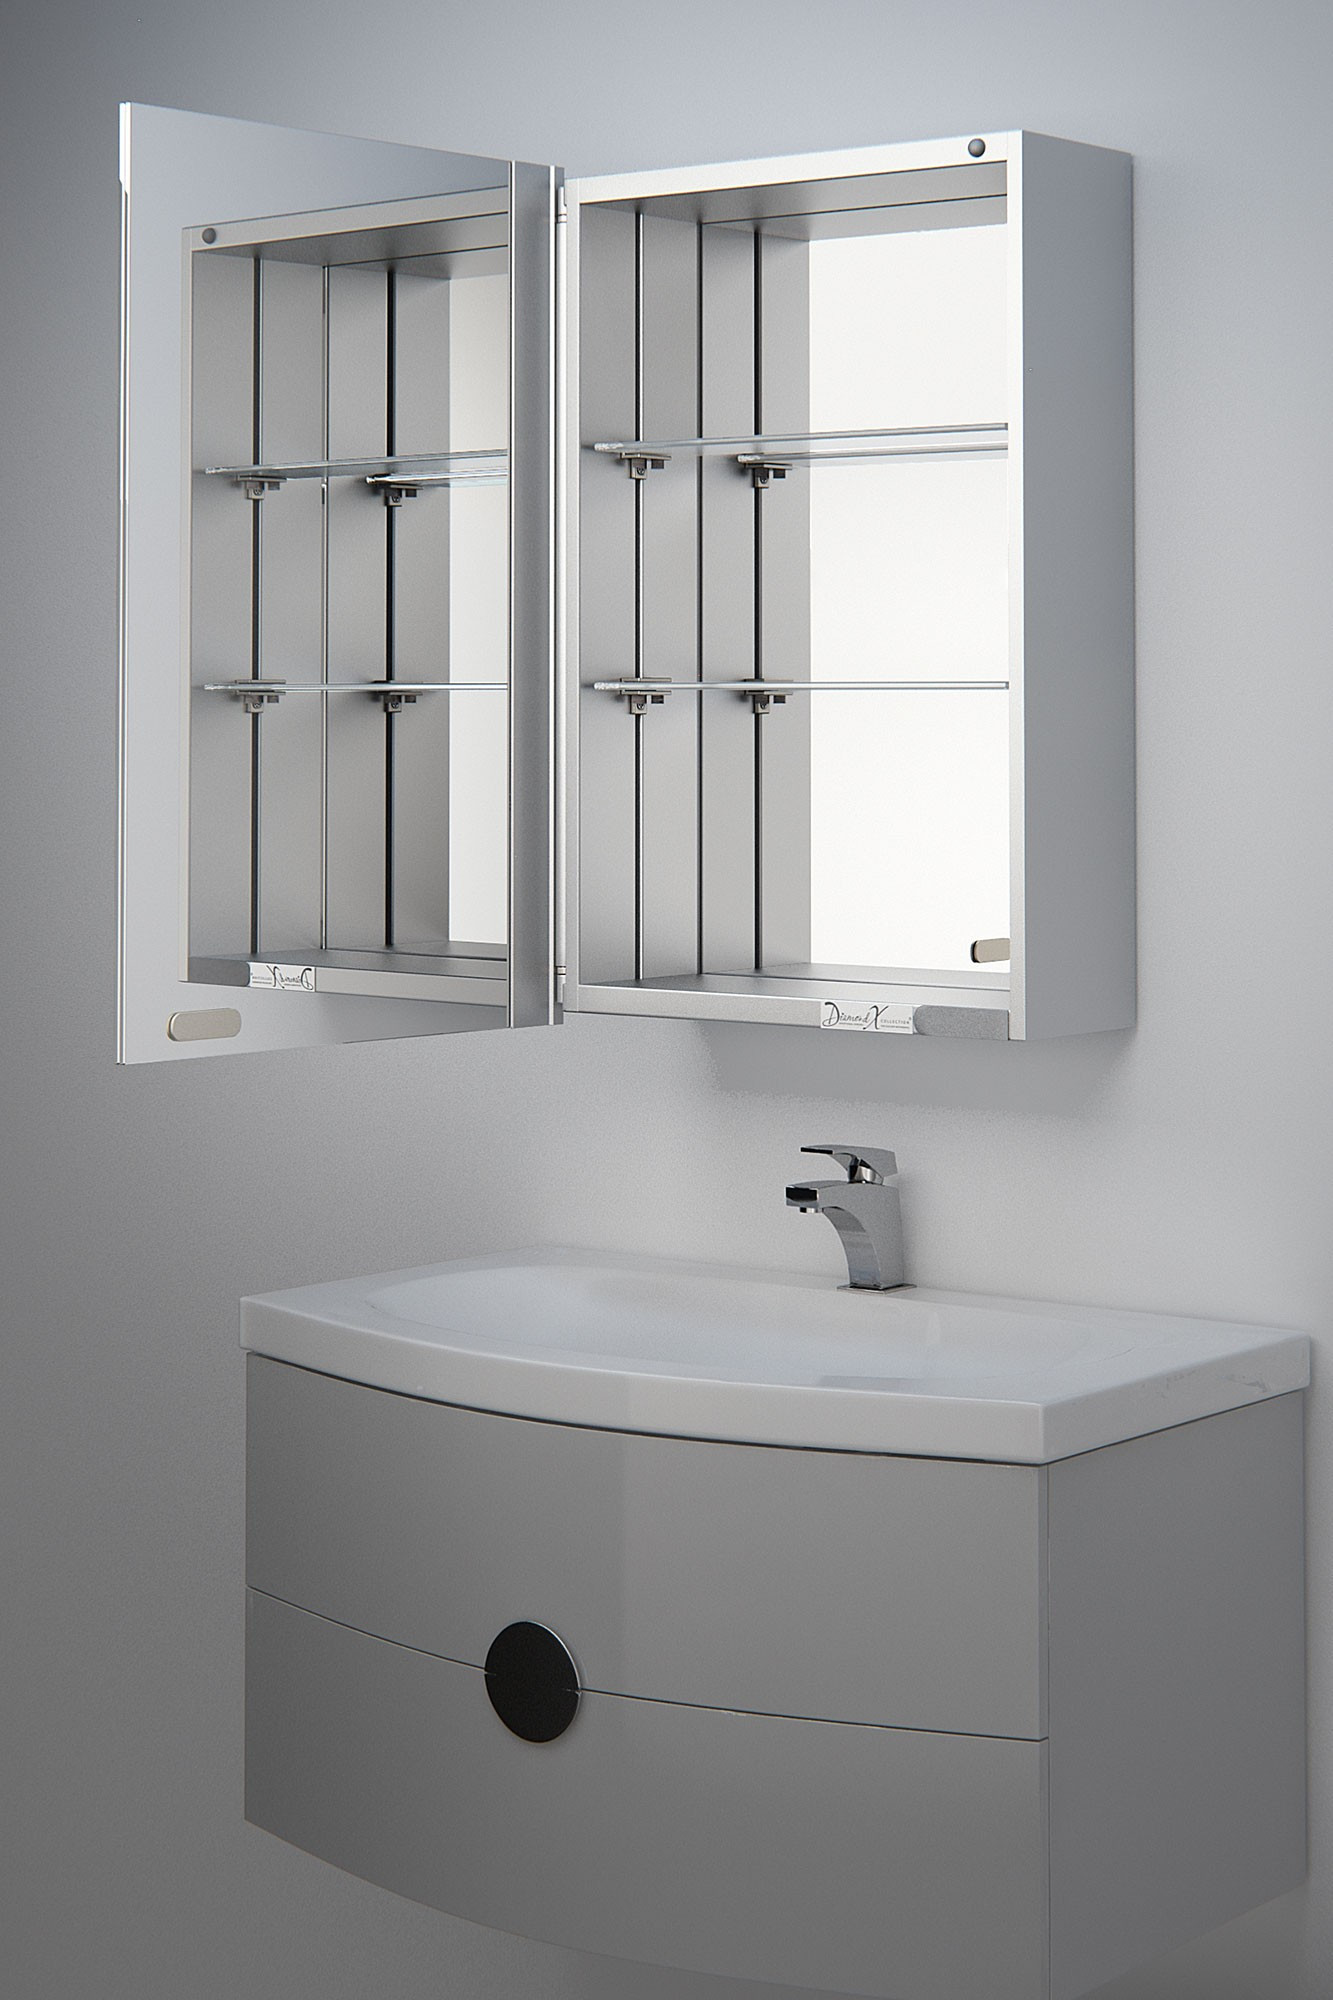 Bathroom Cabinet Mirror
 Alban mirrored bathroom cabinet mirror H 600mm x W 400mm